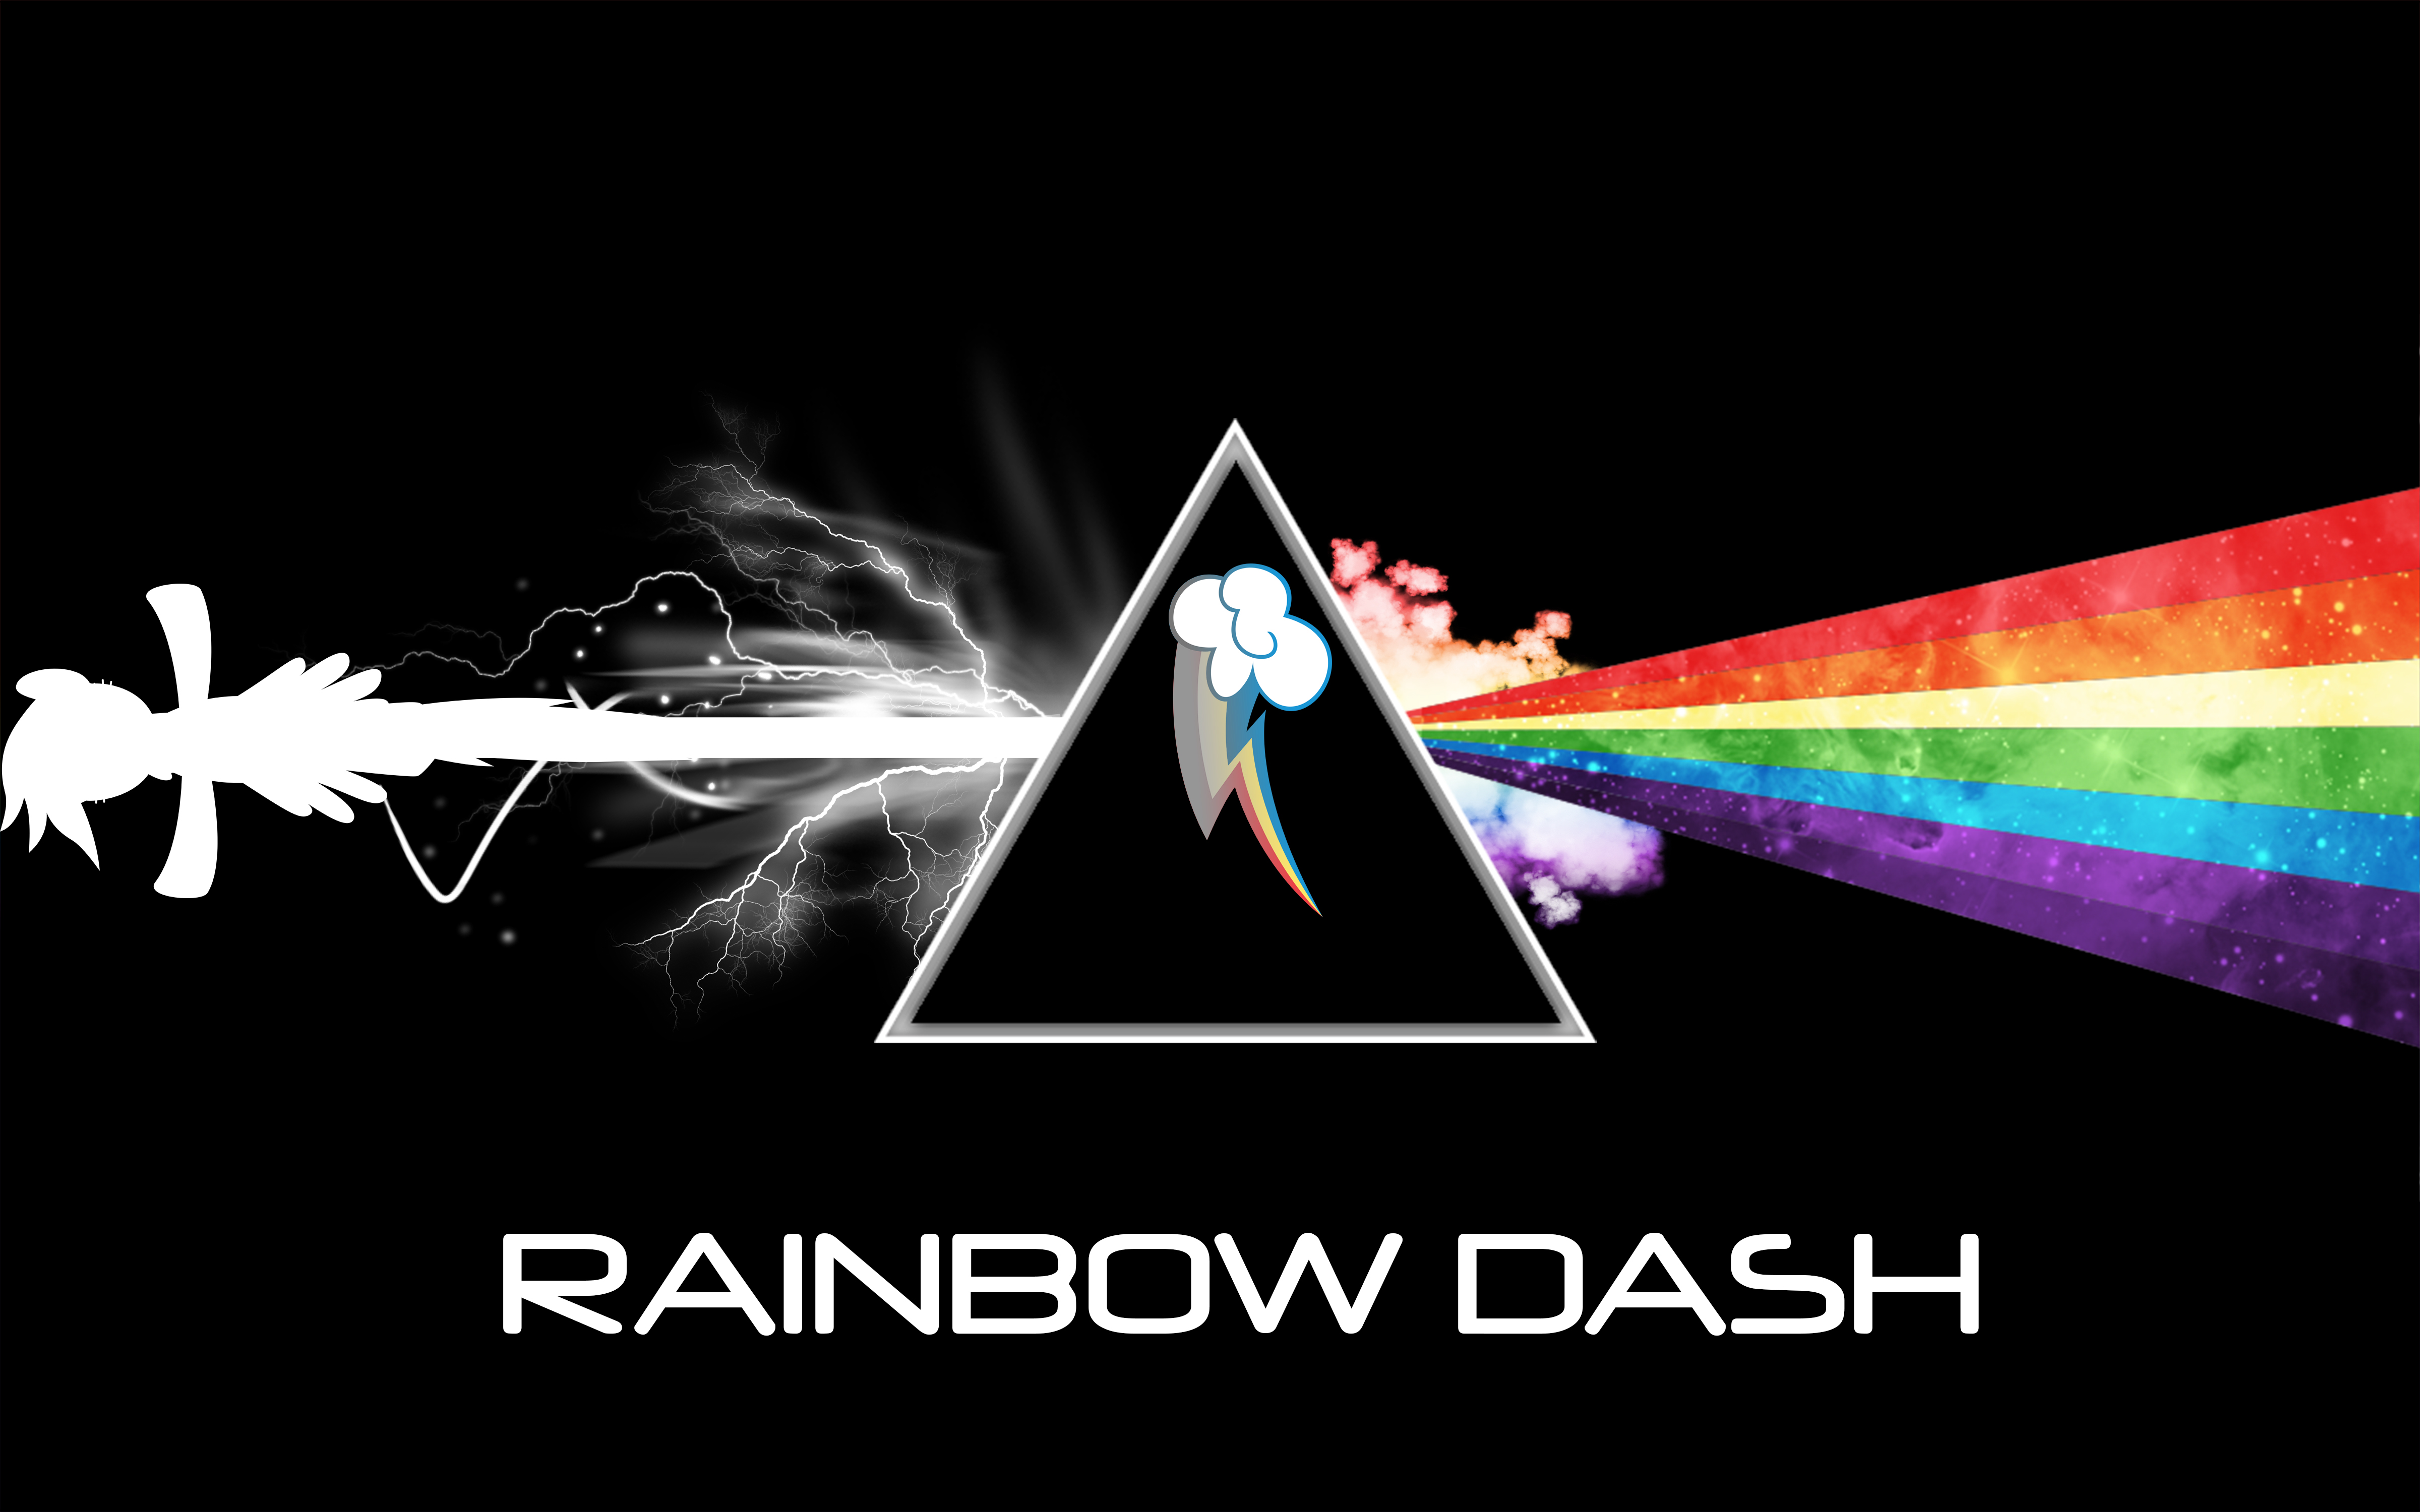 Rainbow Dash Wallpaper High Quality | PixelsTalk.Net4800 x 3000